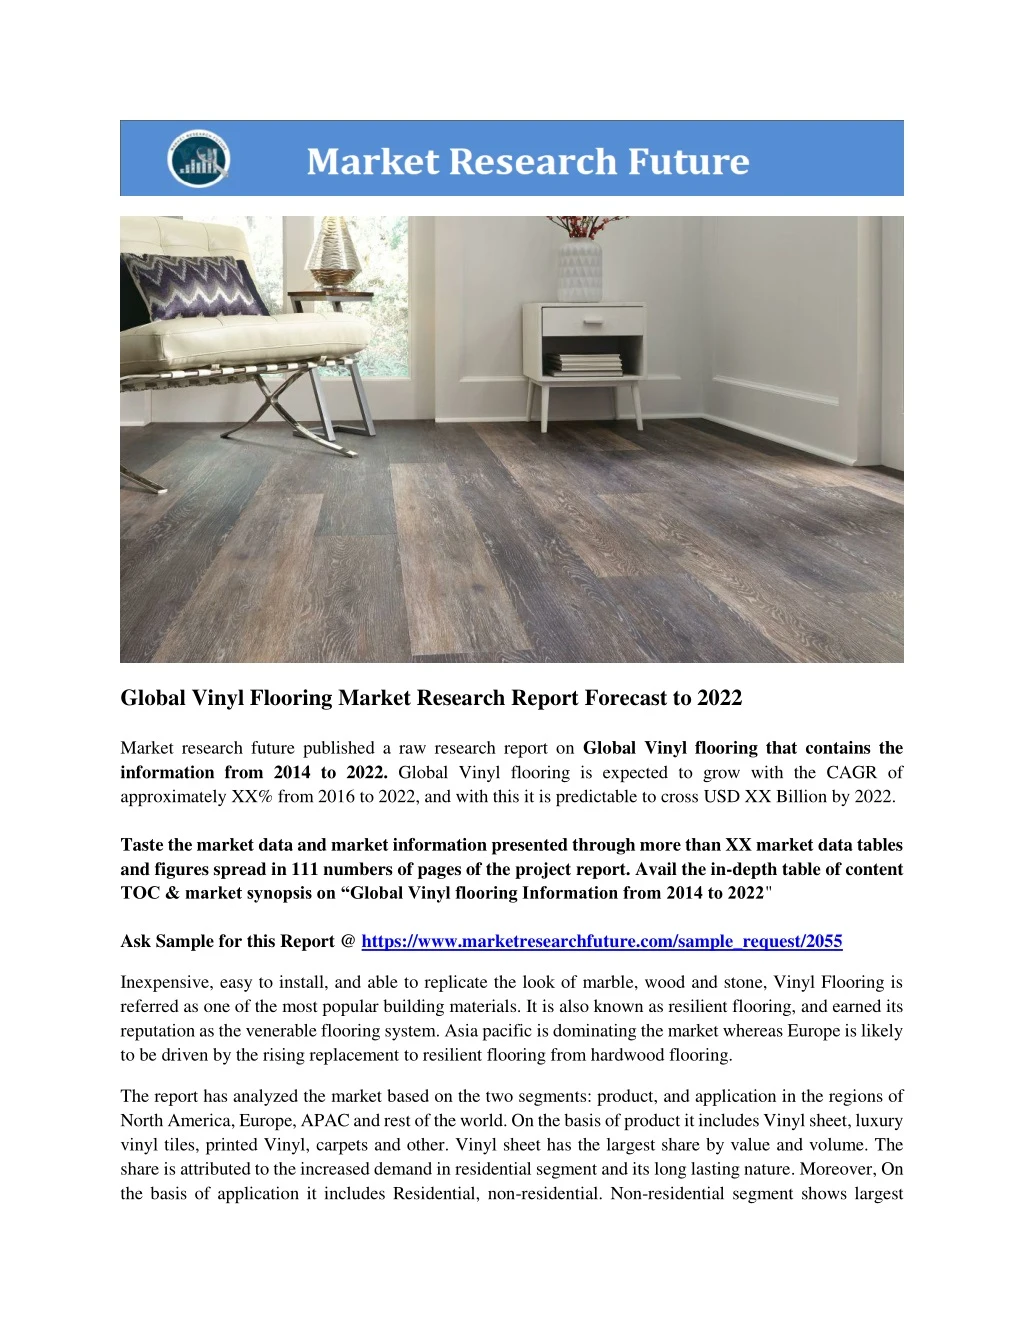 global vinyl flooring market research report